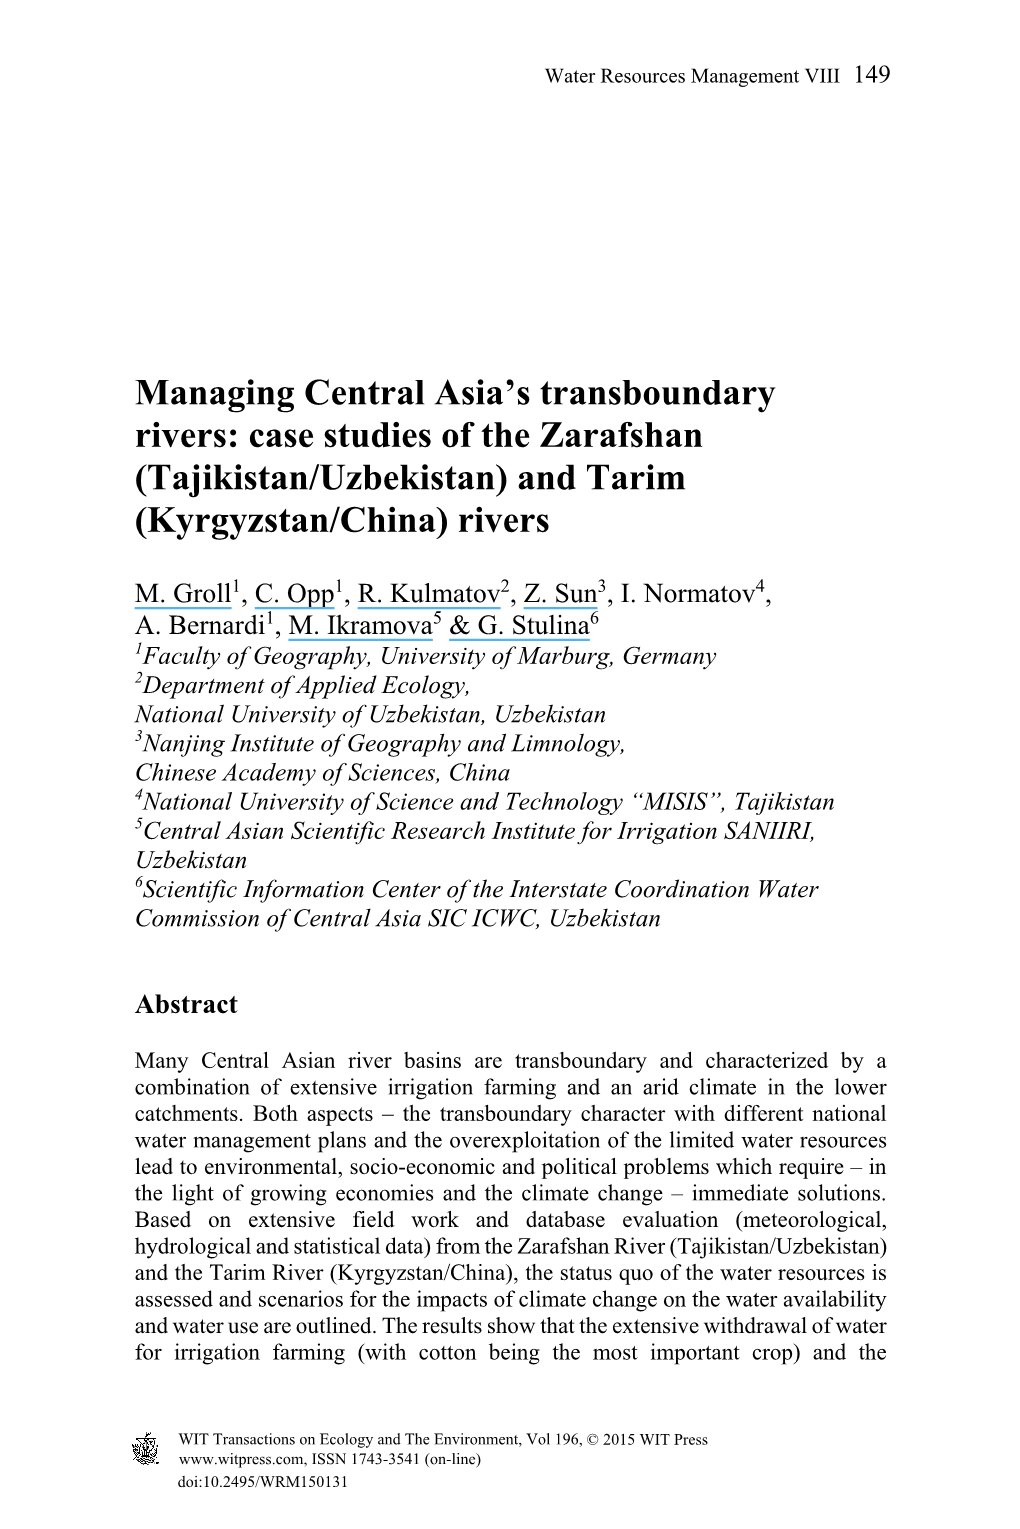 Managing Central Asia's Transboundary Rivers: Case Studies of the Zarafshan (Tajikistan/Uzbekistan) and Tarim (Kyrgyzstan/Chin